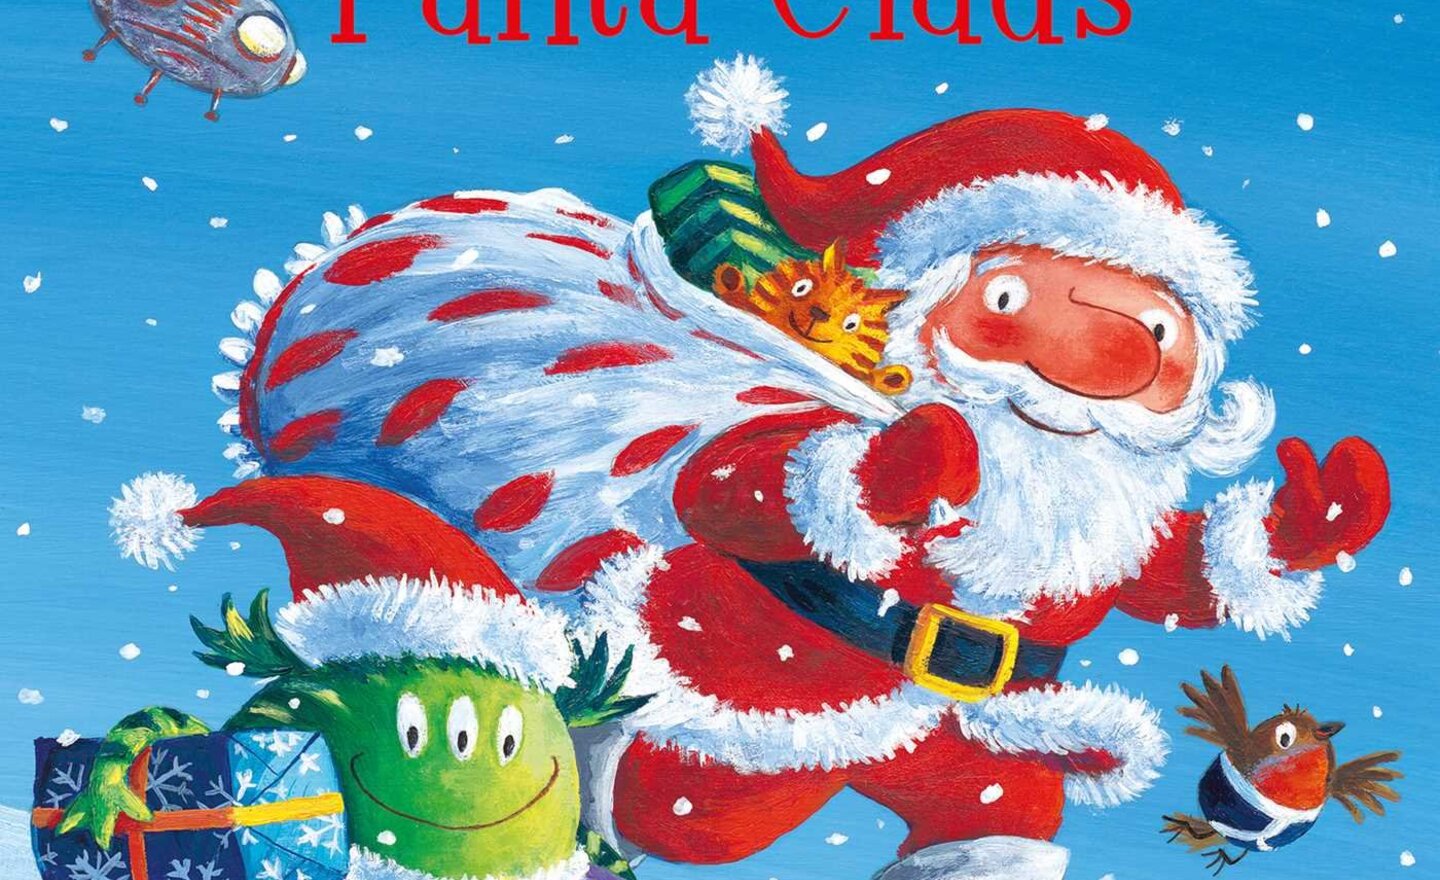 Image of Aliens love Panta Claus